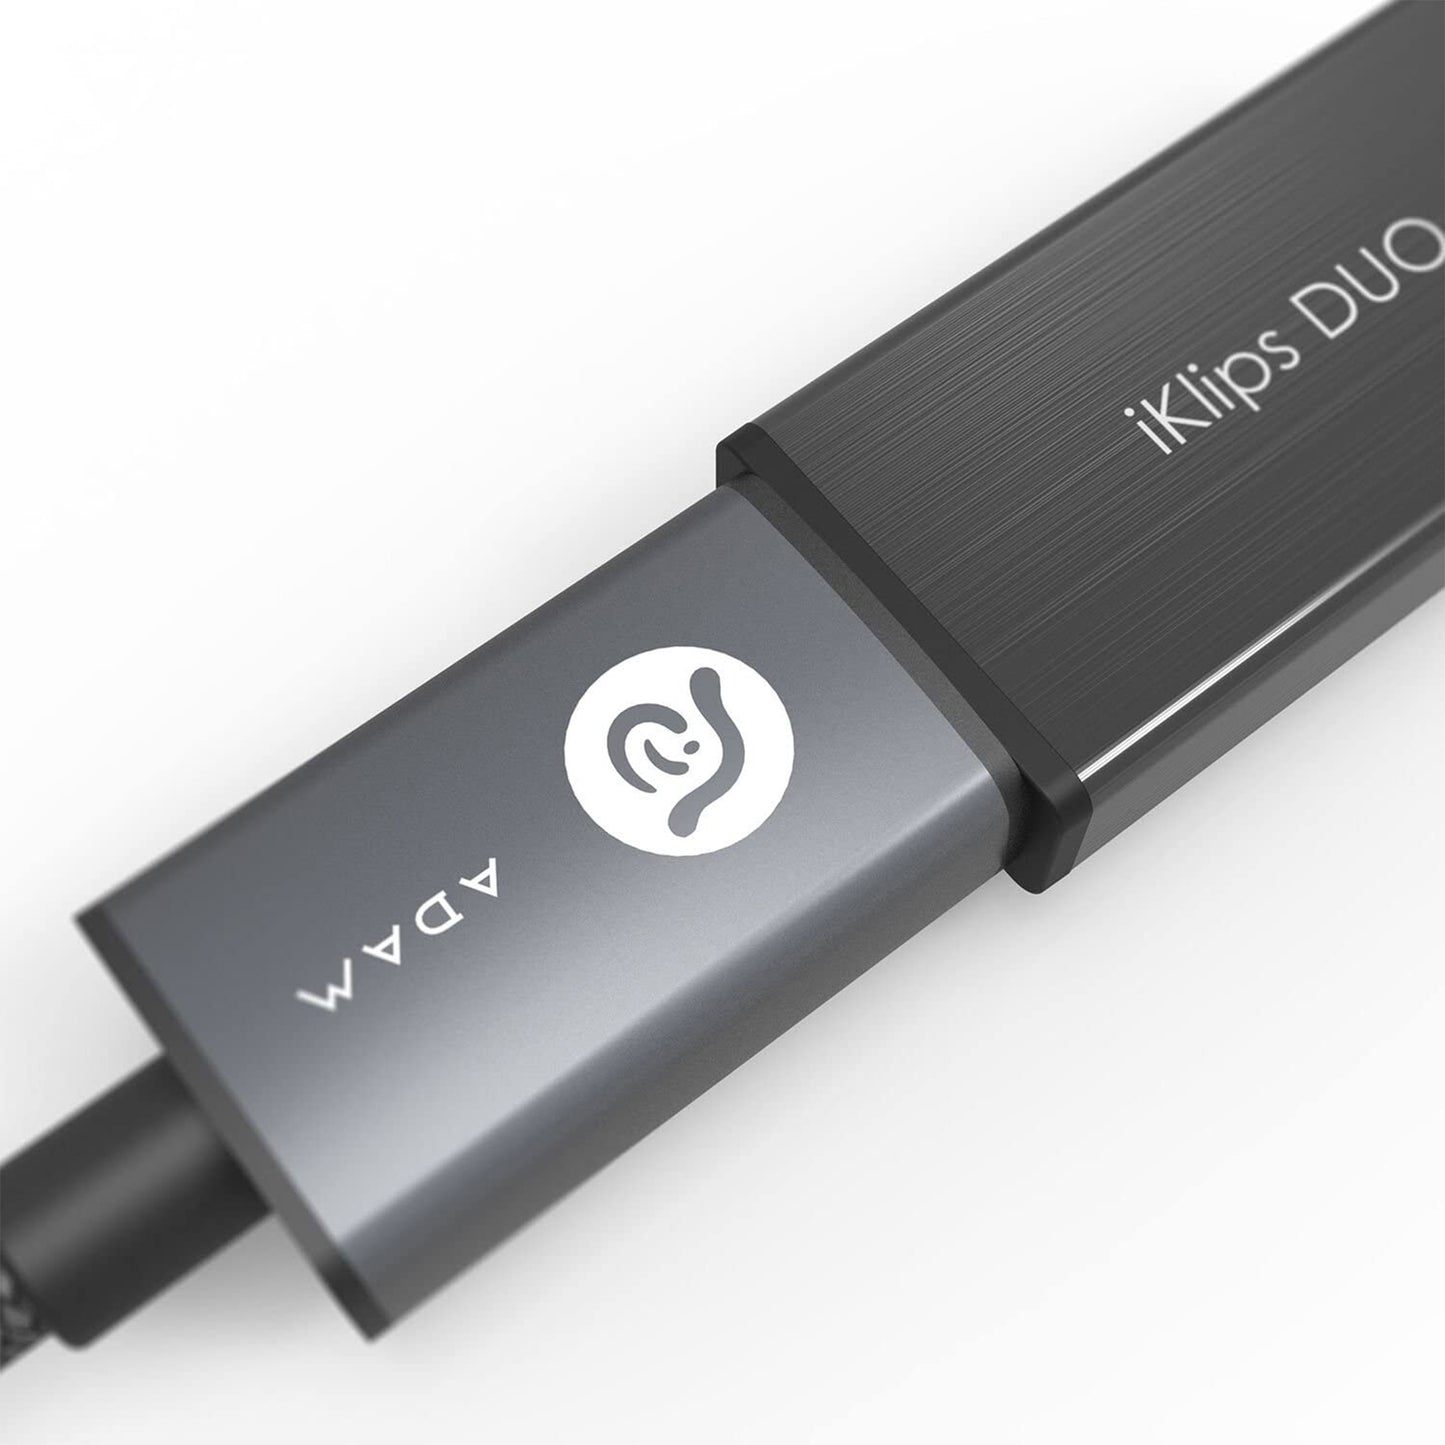 ADAM ELEMENTS USB C to USB Adapter - Grey